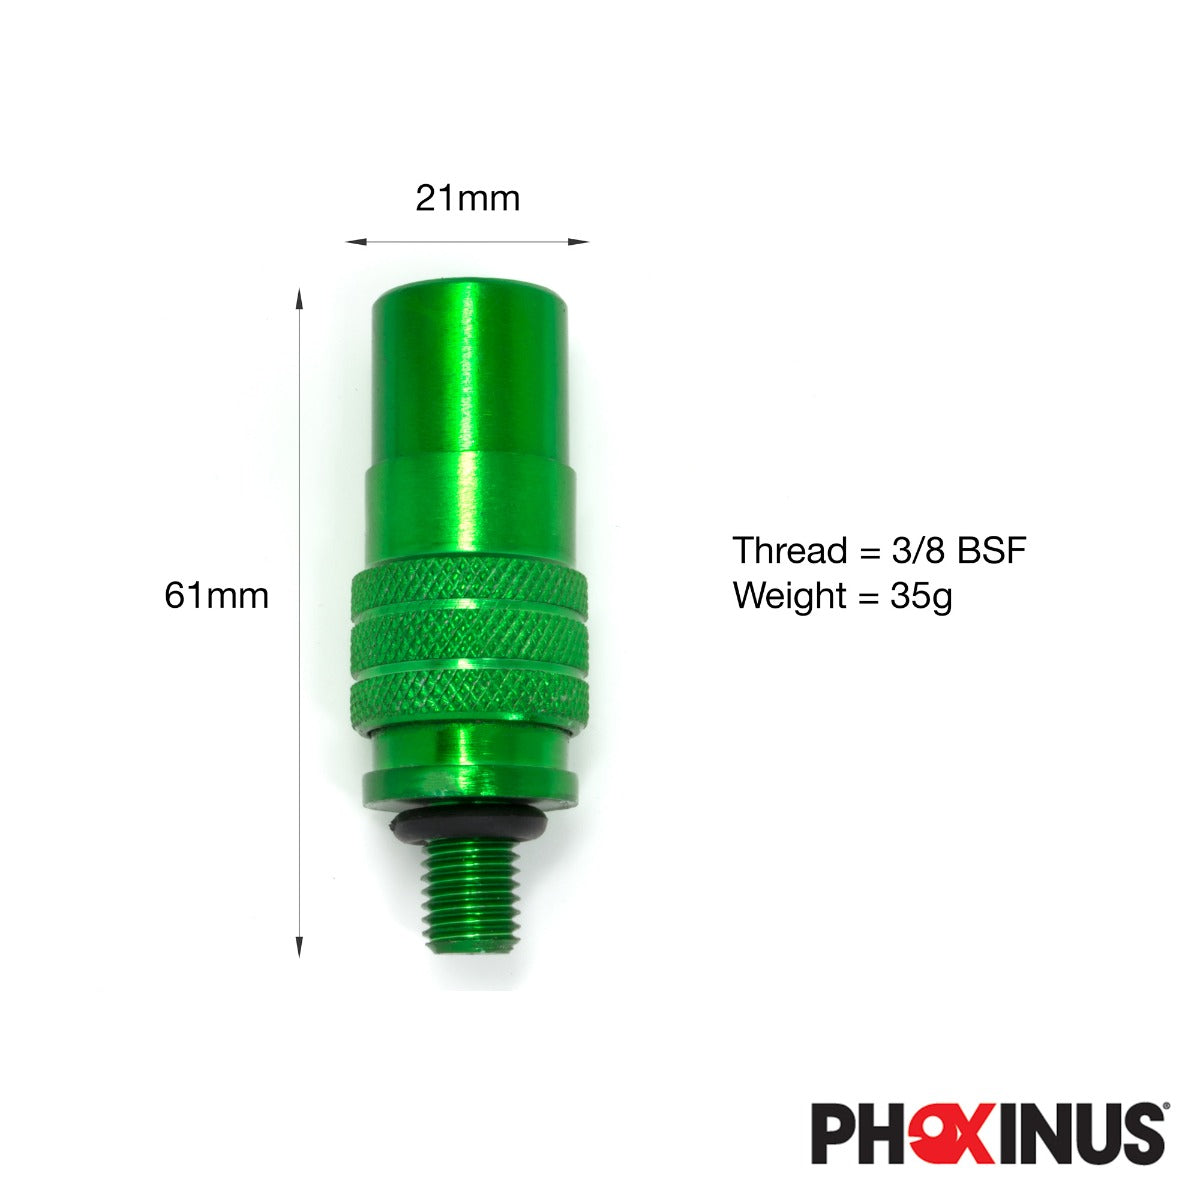 Phoxinus Quick Release Connectors